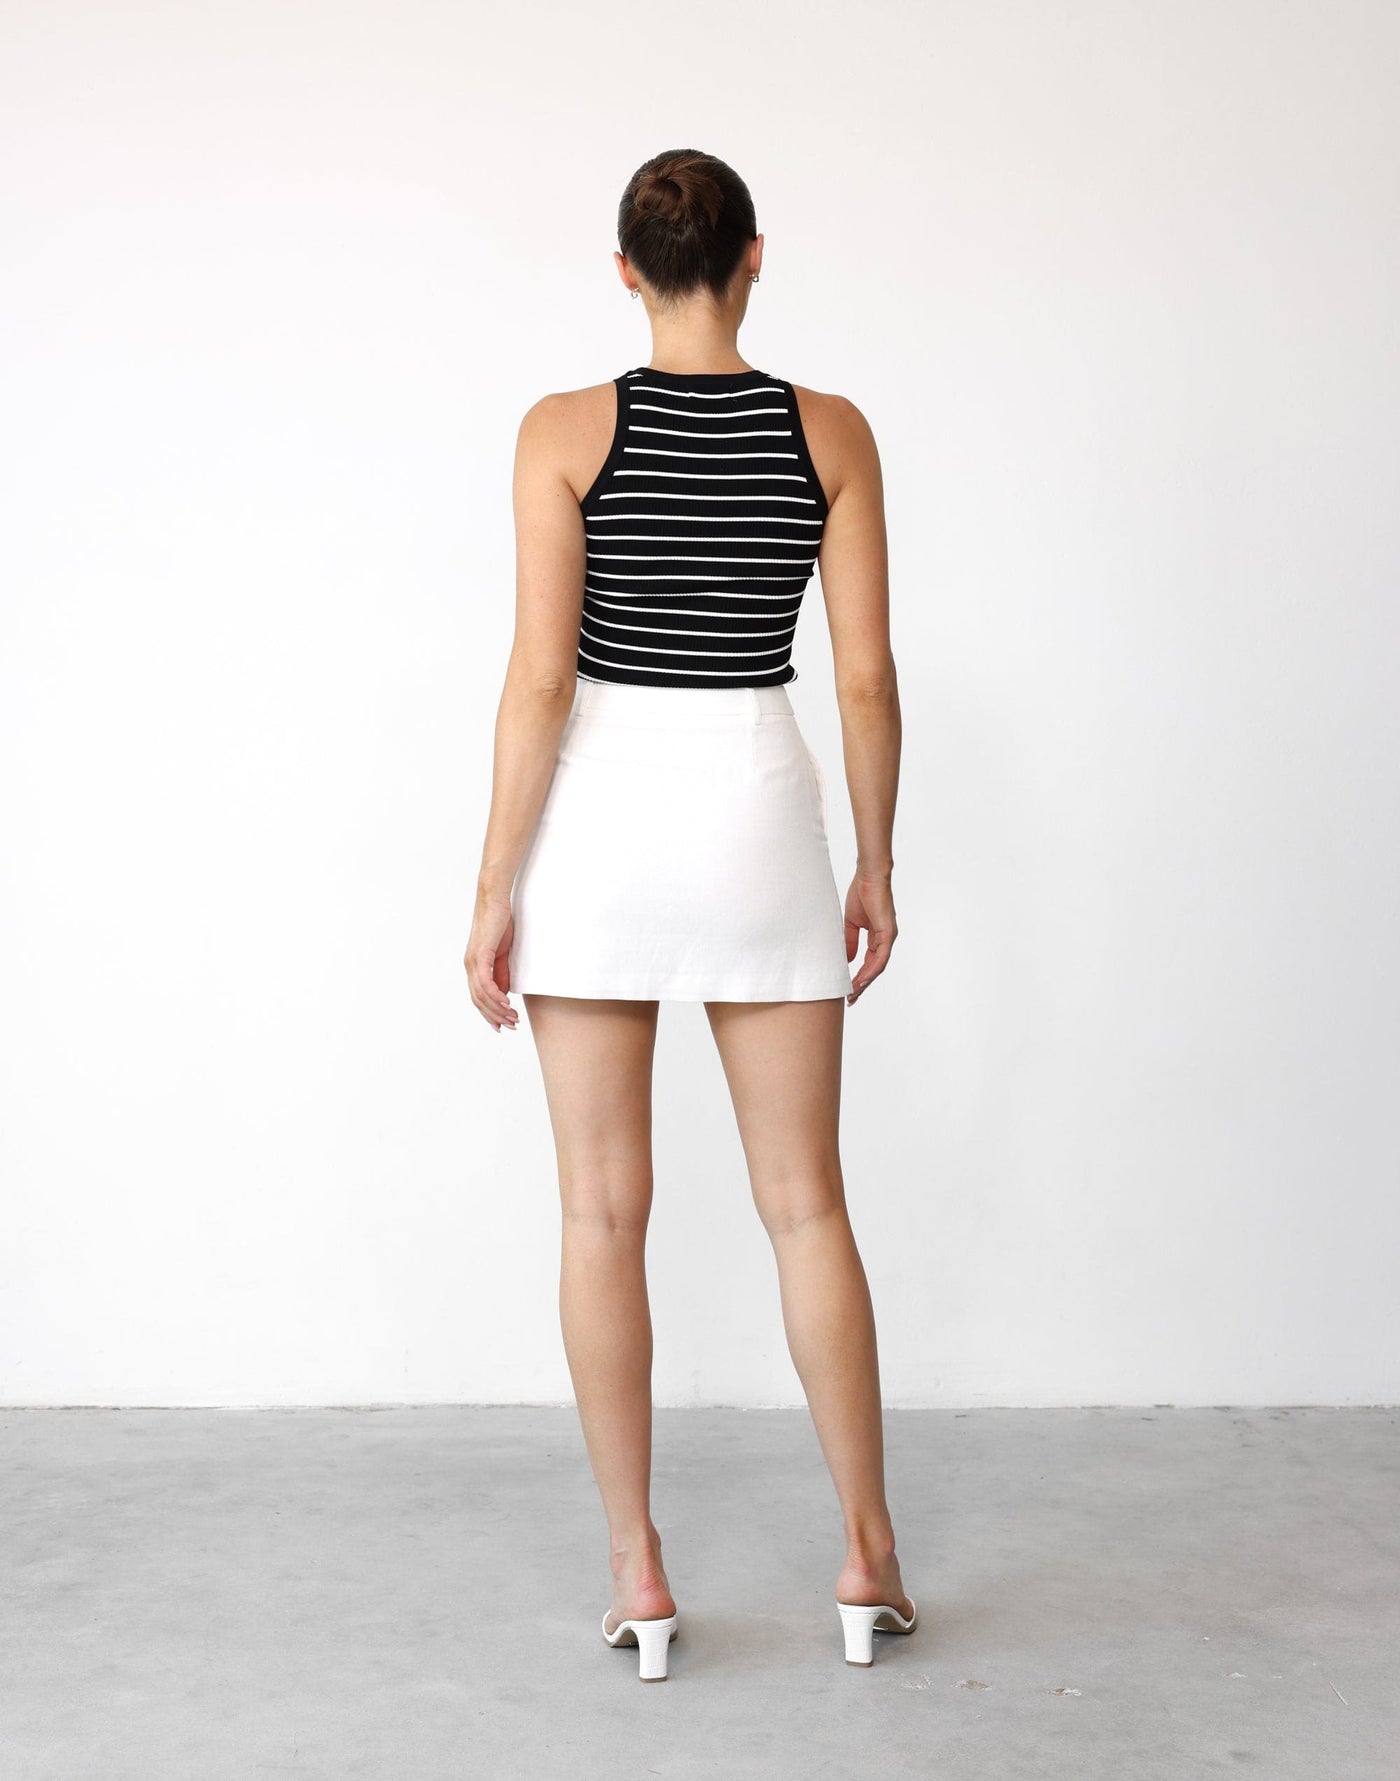 Eleynah Tank Top (Black/White) - Striped Ribbed High Neck Tank - Women's Top - Charcoal Clothing